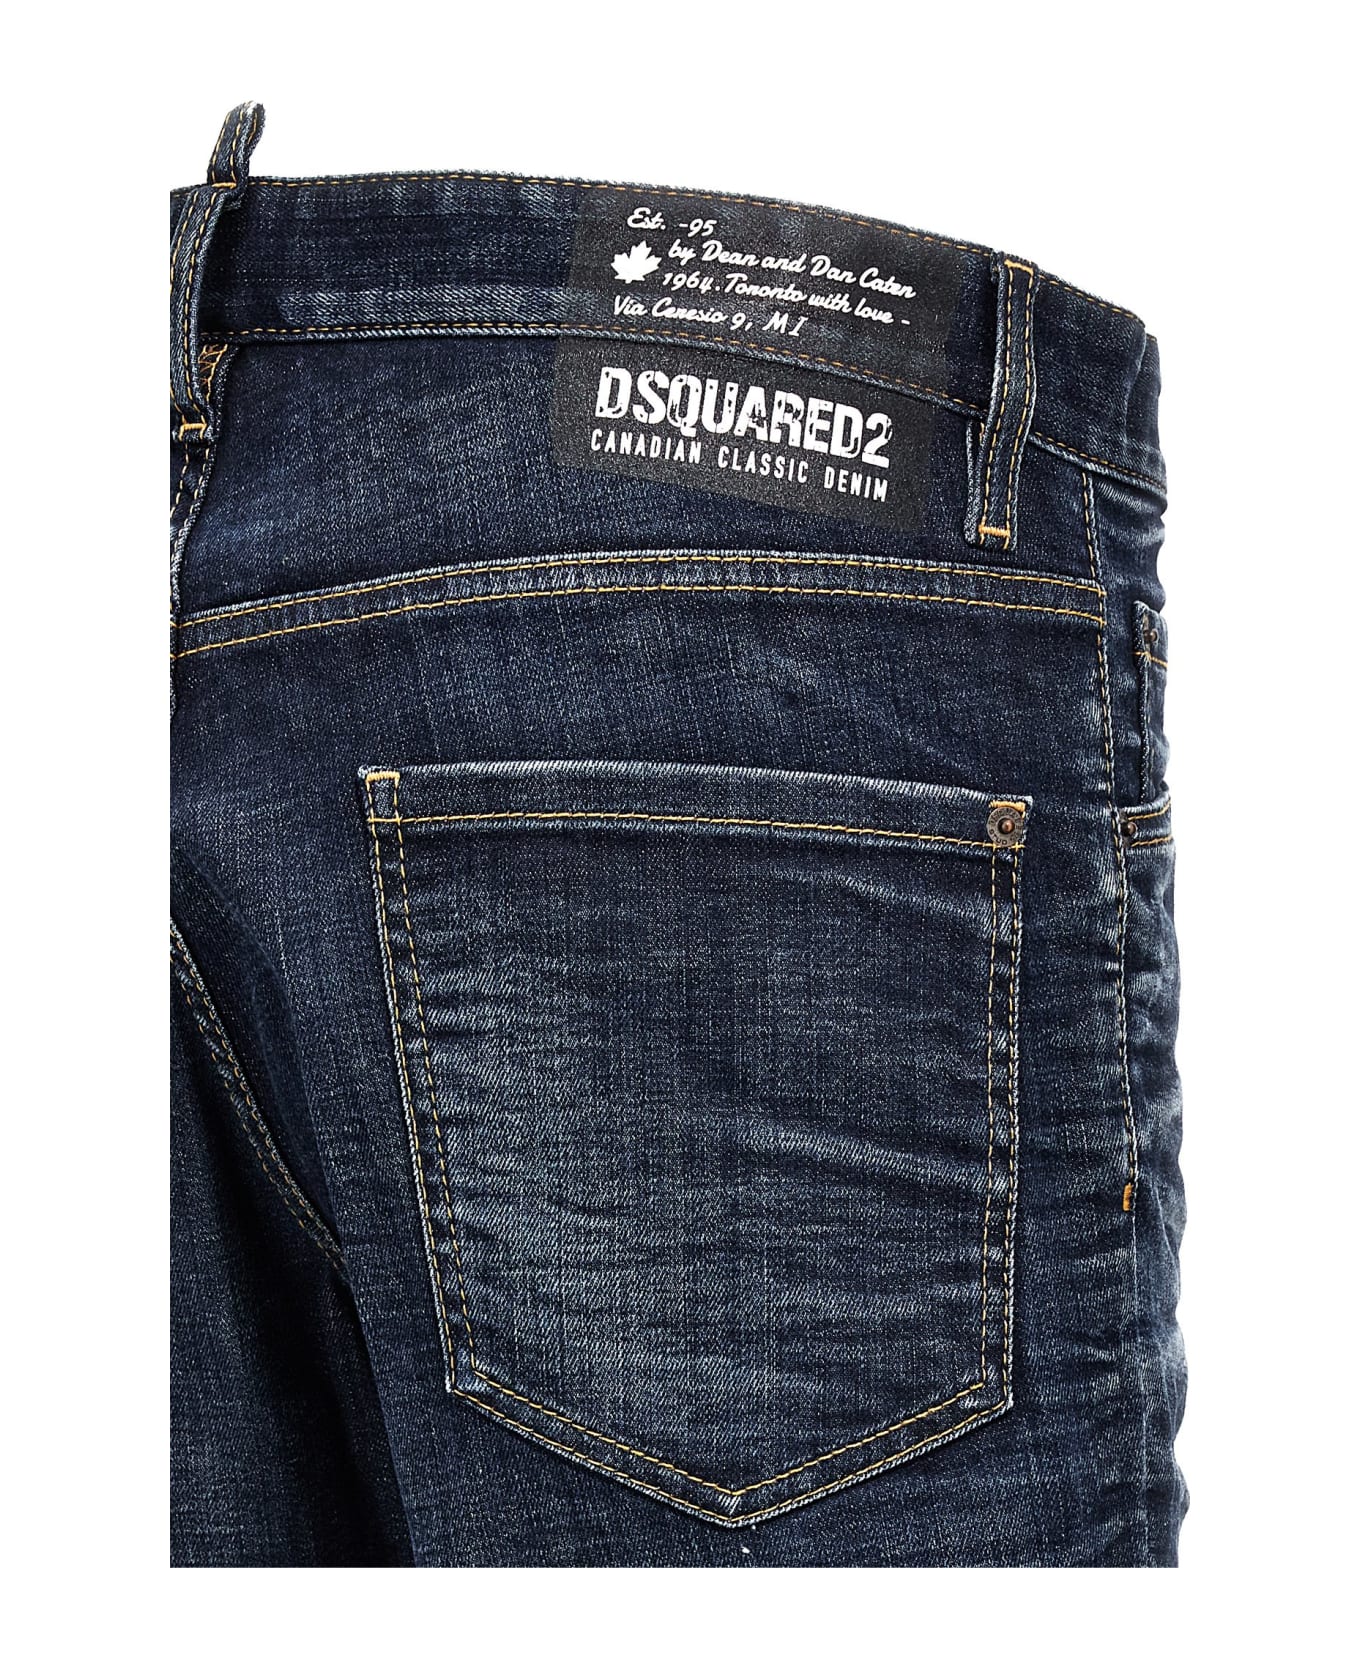 Dsquared2 Cool-guy Jeans - Denim デニム